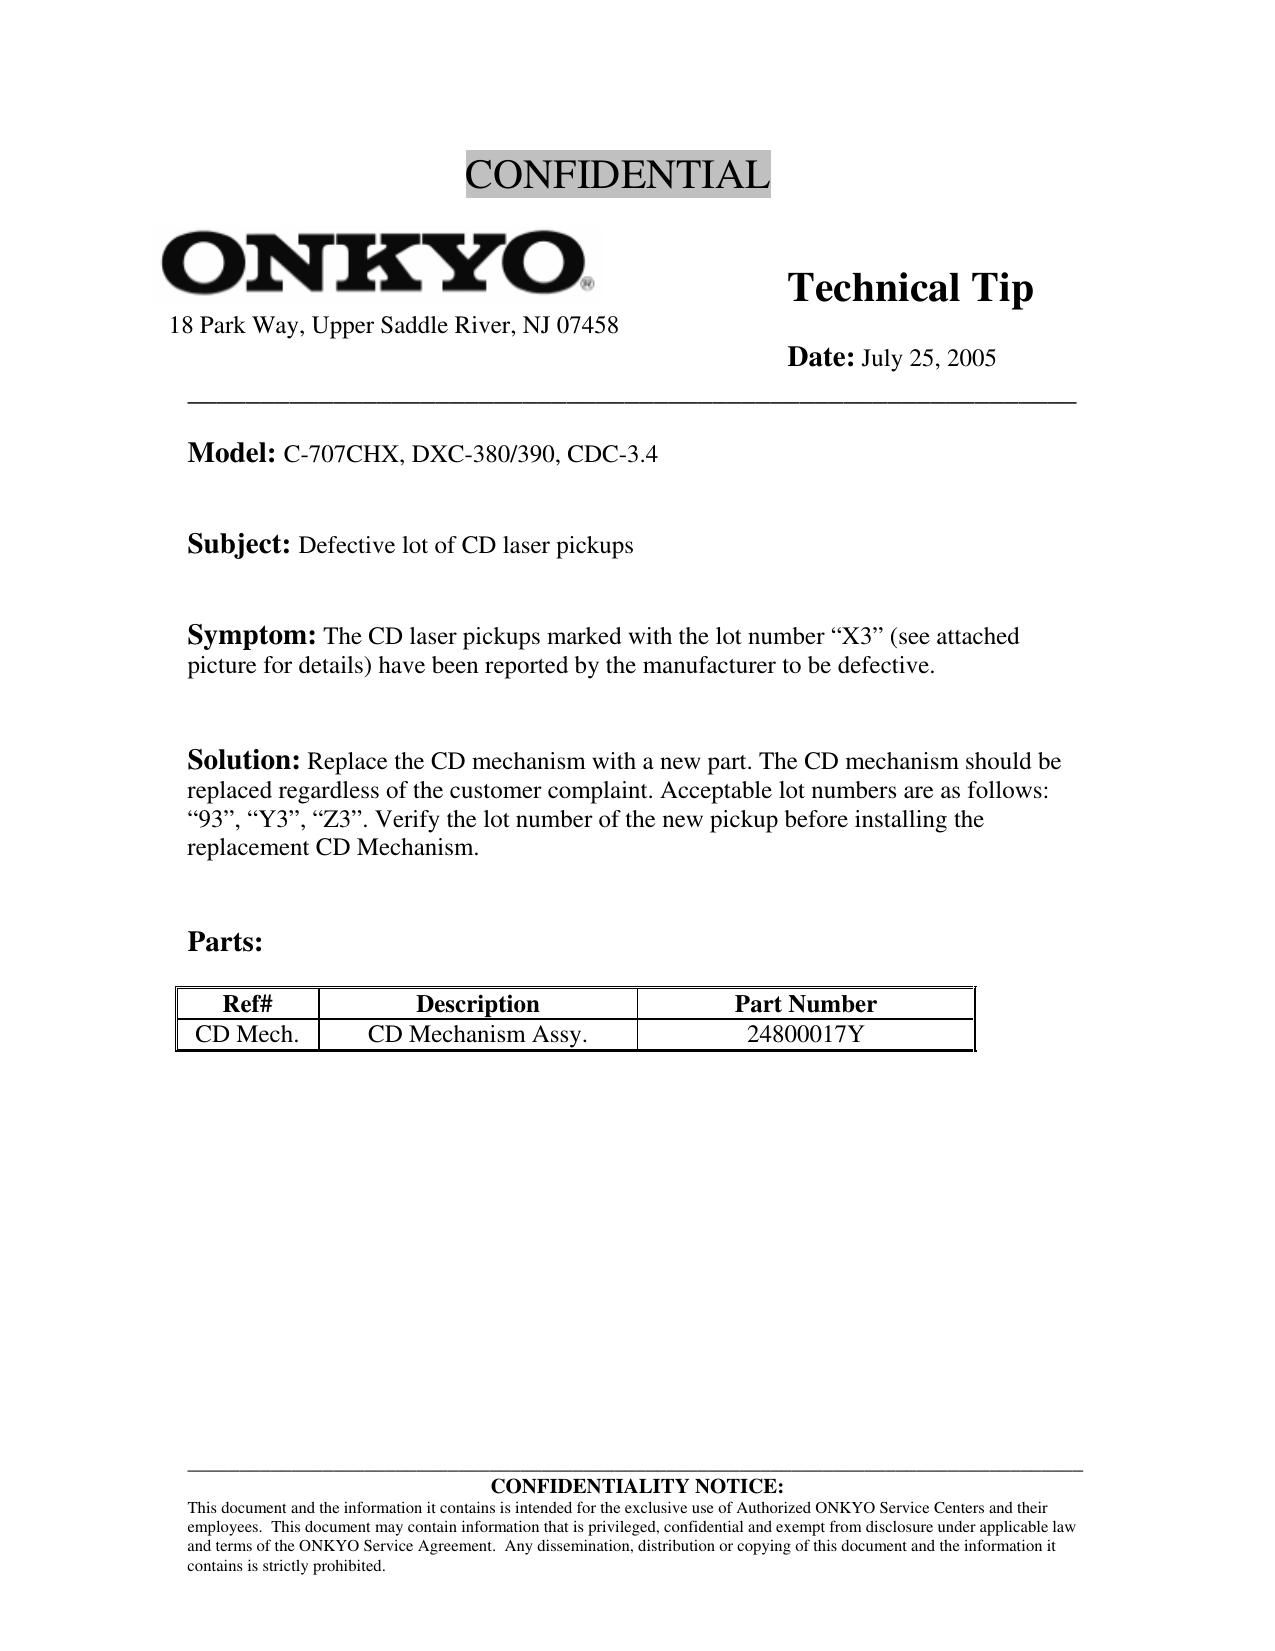 Onkyo C 707 Service Manual